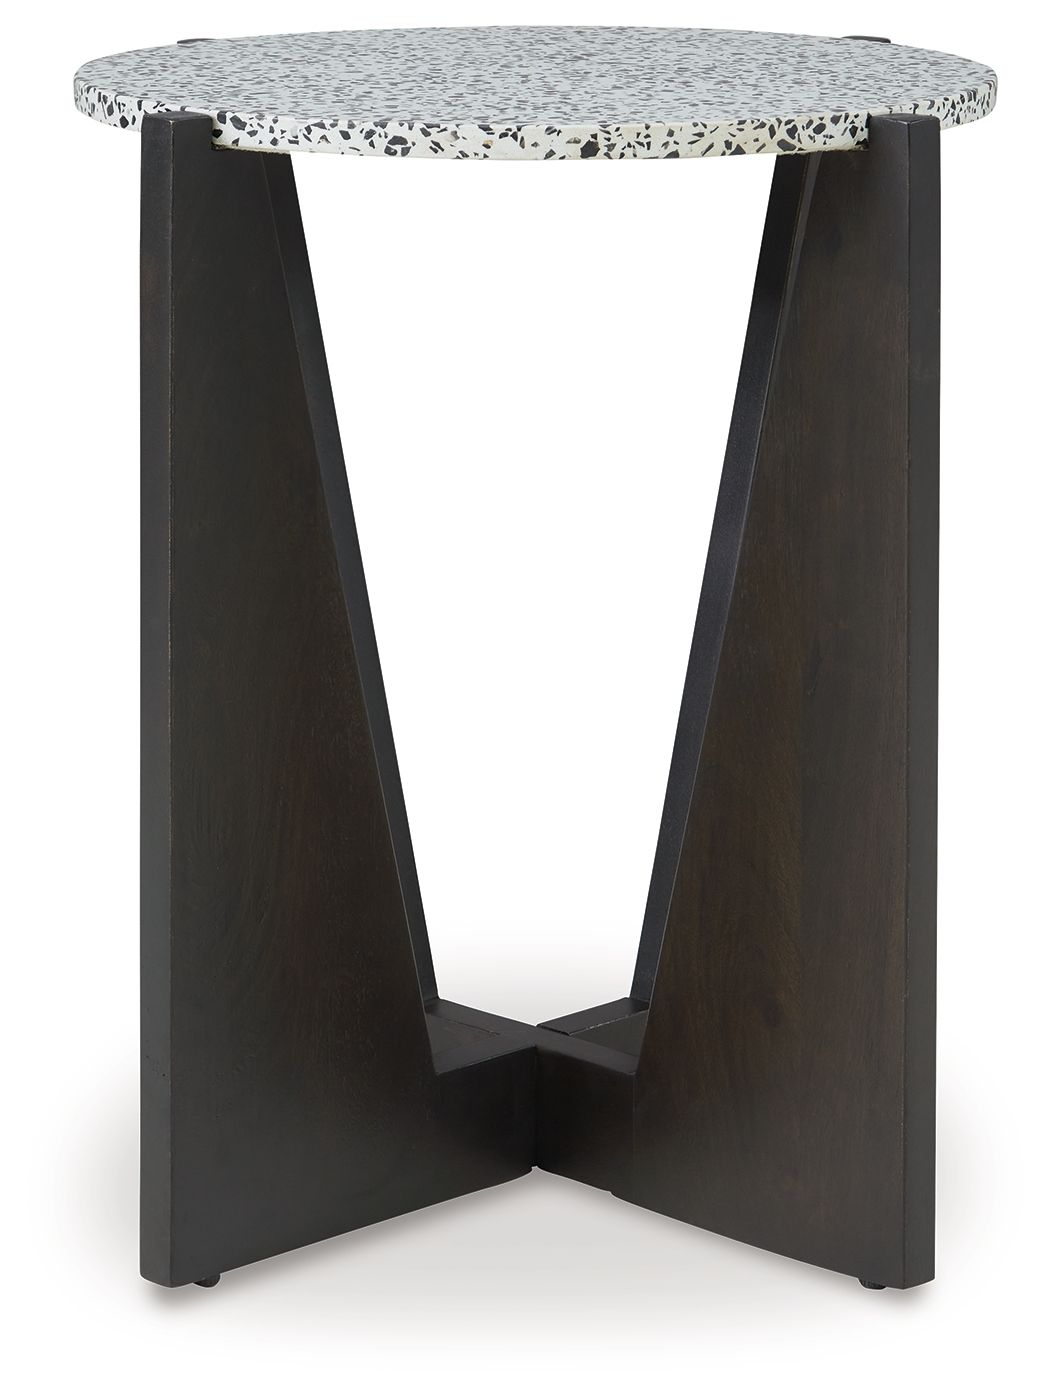 Tellrich - Black / White - Accent Table - 5th Avenue Furniture